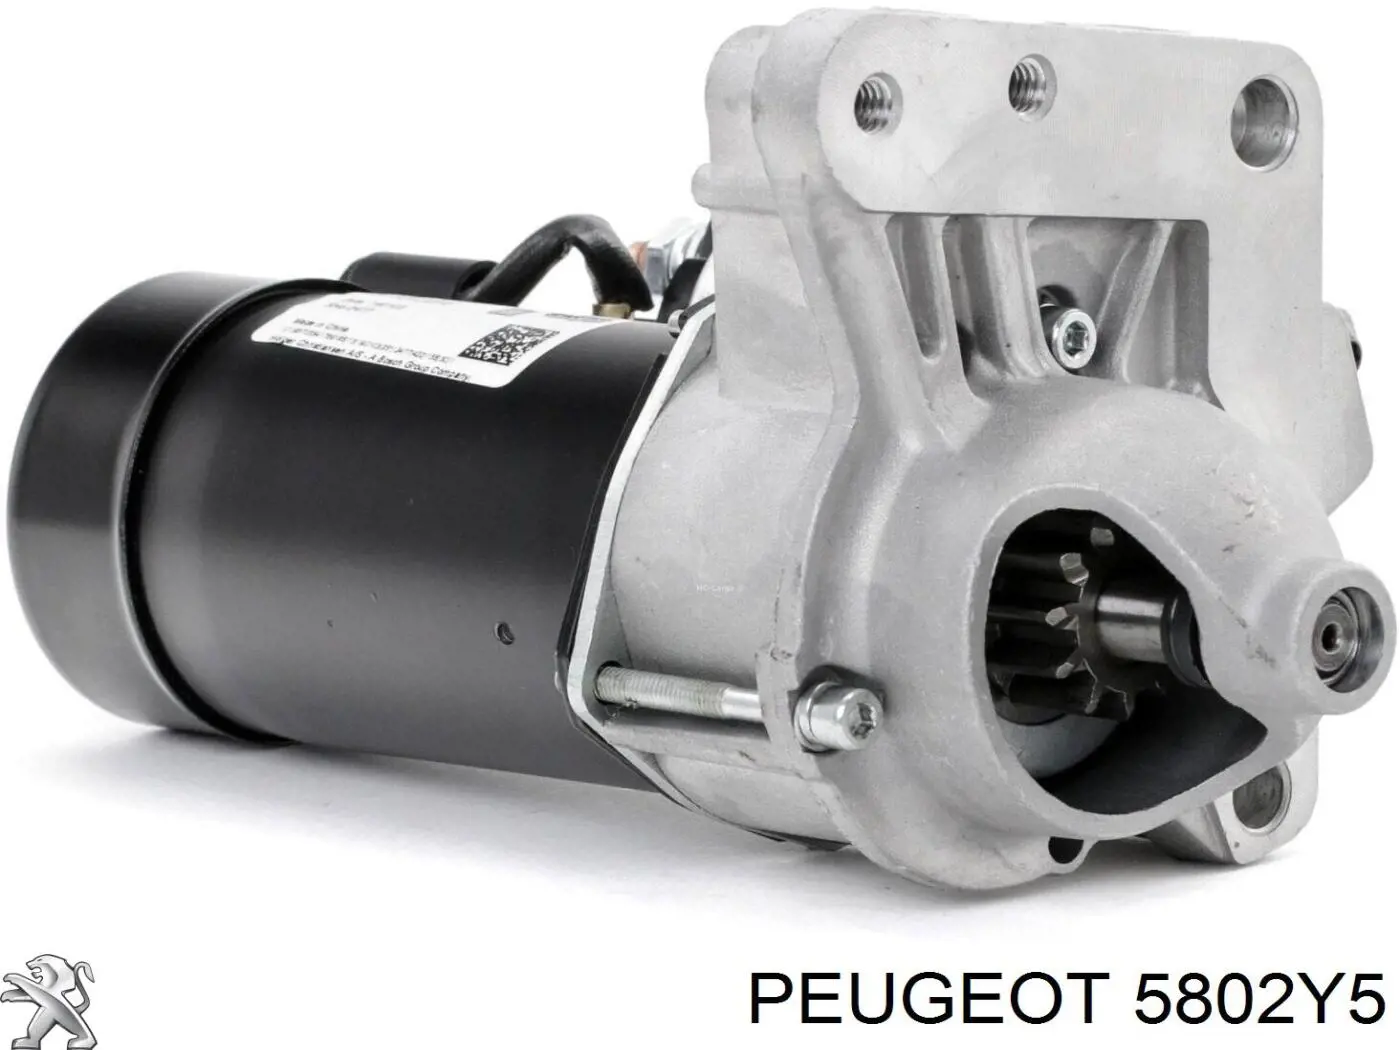 5802Y5 Peugeot/Citroen motor de arranque